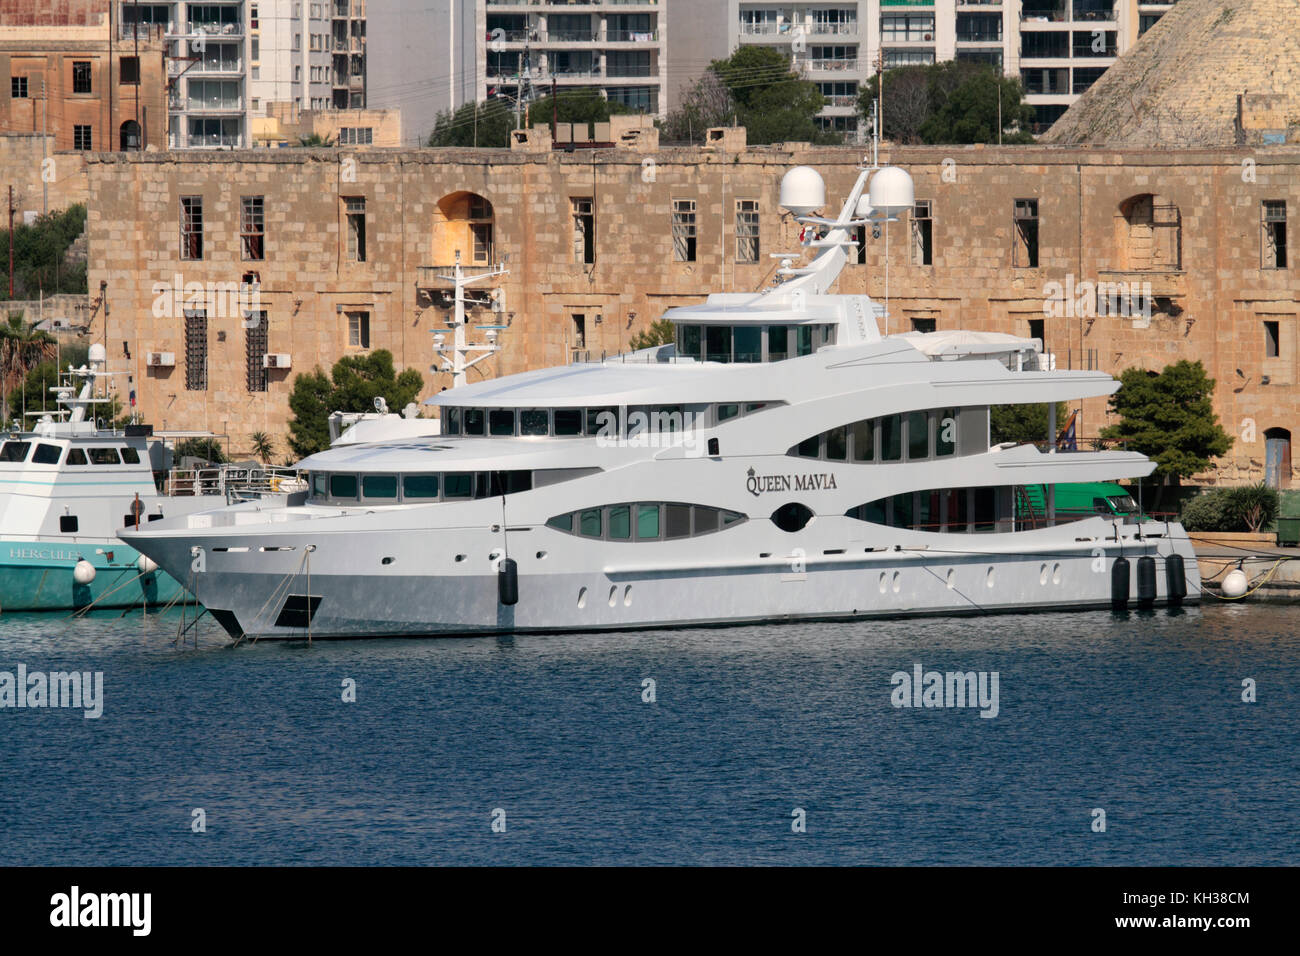 The 56m Oceanco luxury super yacht Queen Mavia in Marsamxett Harbour, Malta Stock Photo